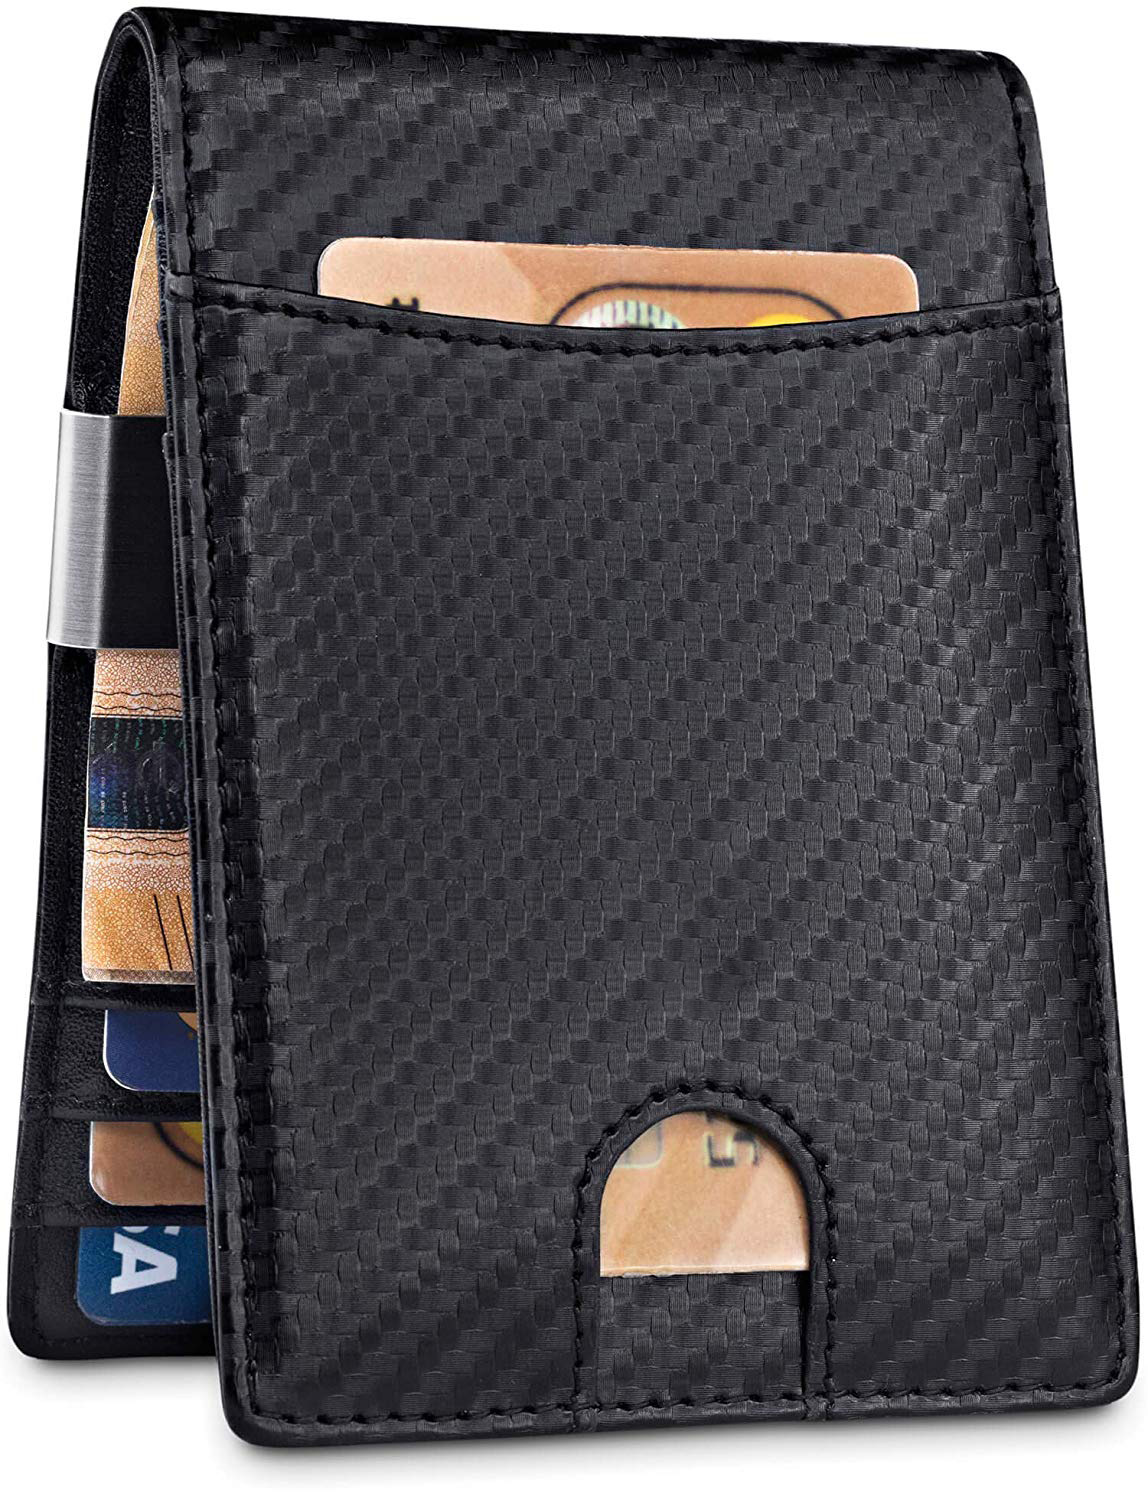 Money Clip Leather Wallets For Men-RFID Blocking Credit Card Holder Front Pocket Slim Minimalist in a Gift Box JASON